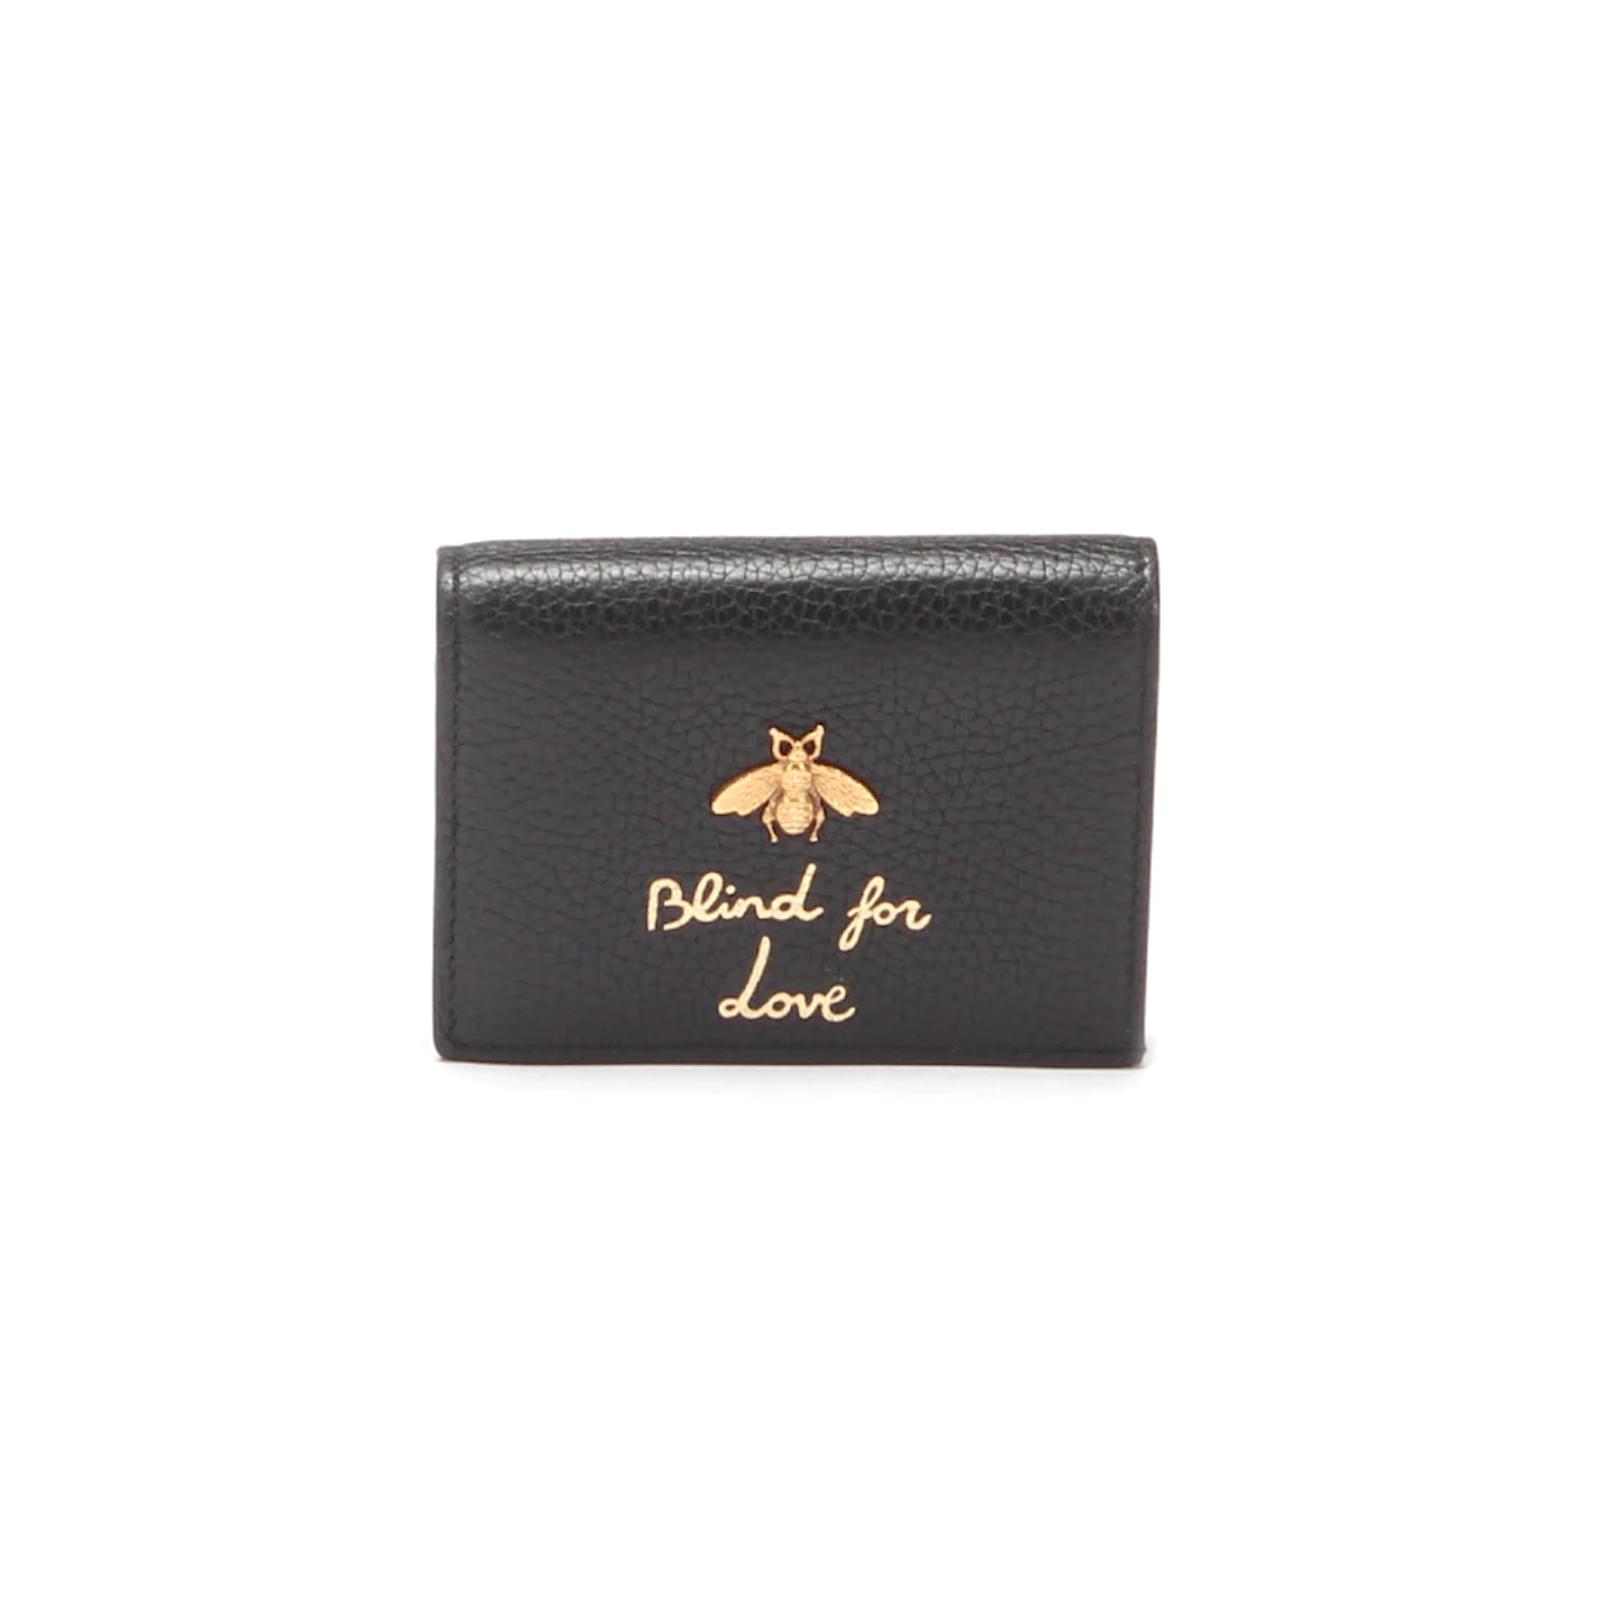 Animalier leather card case